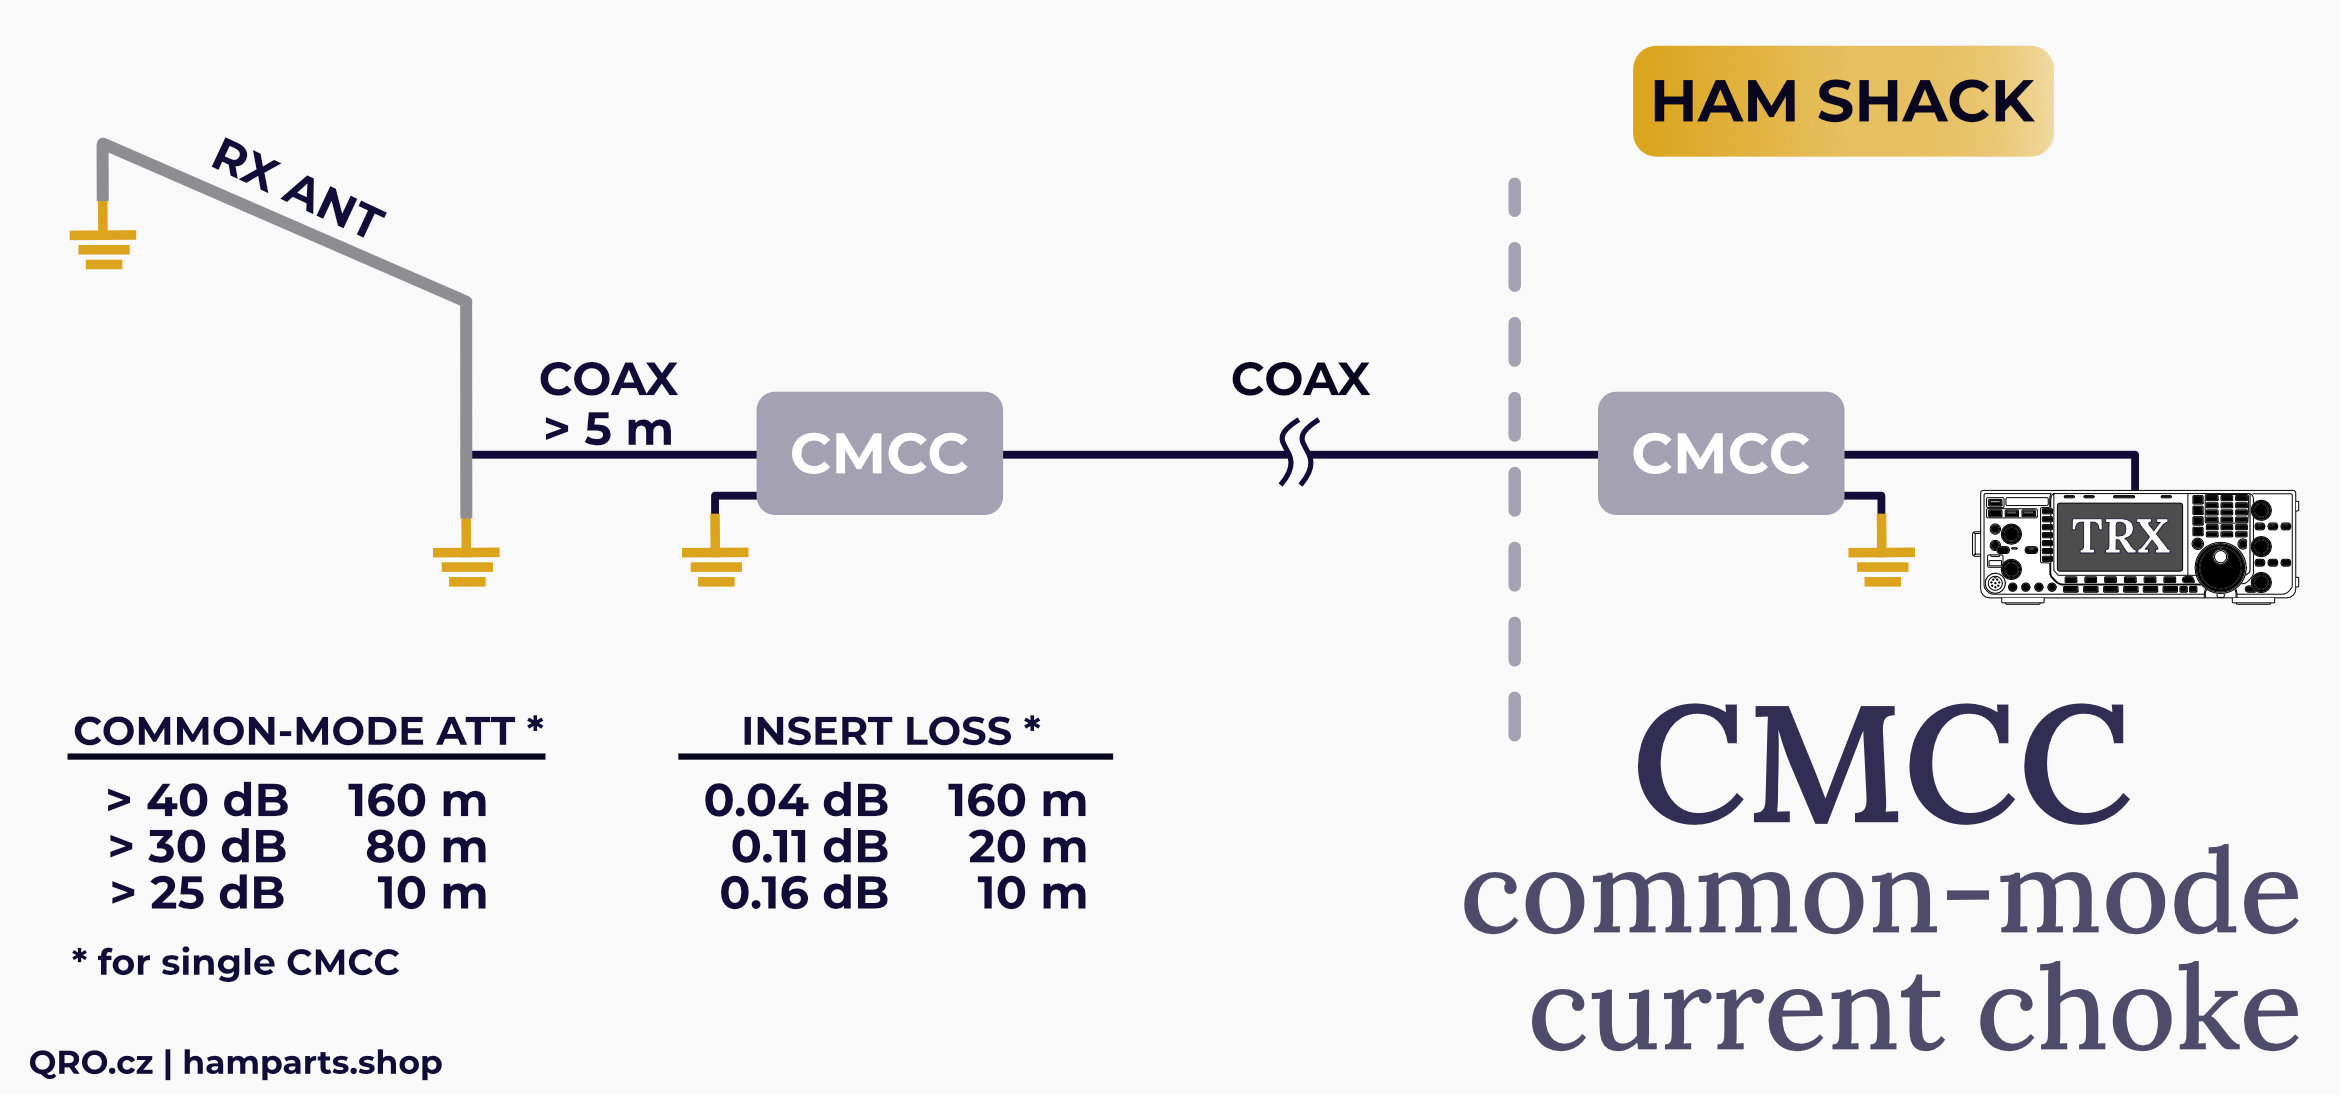 option common-mode current choke to ham shack qro.cz hamparts.shop